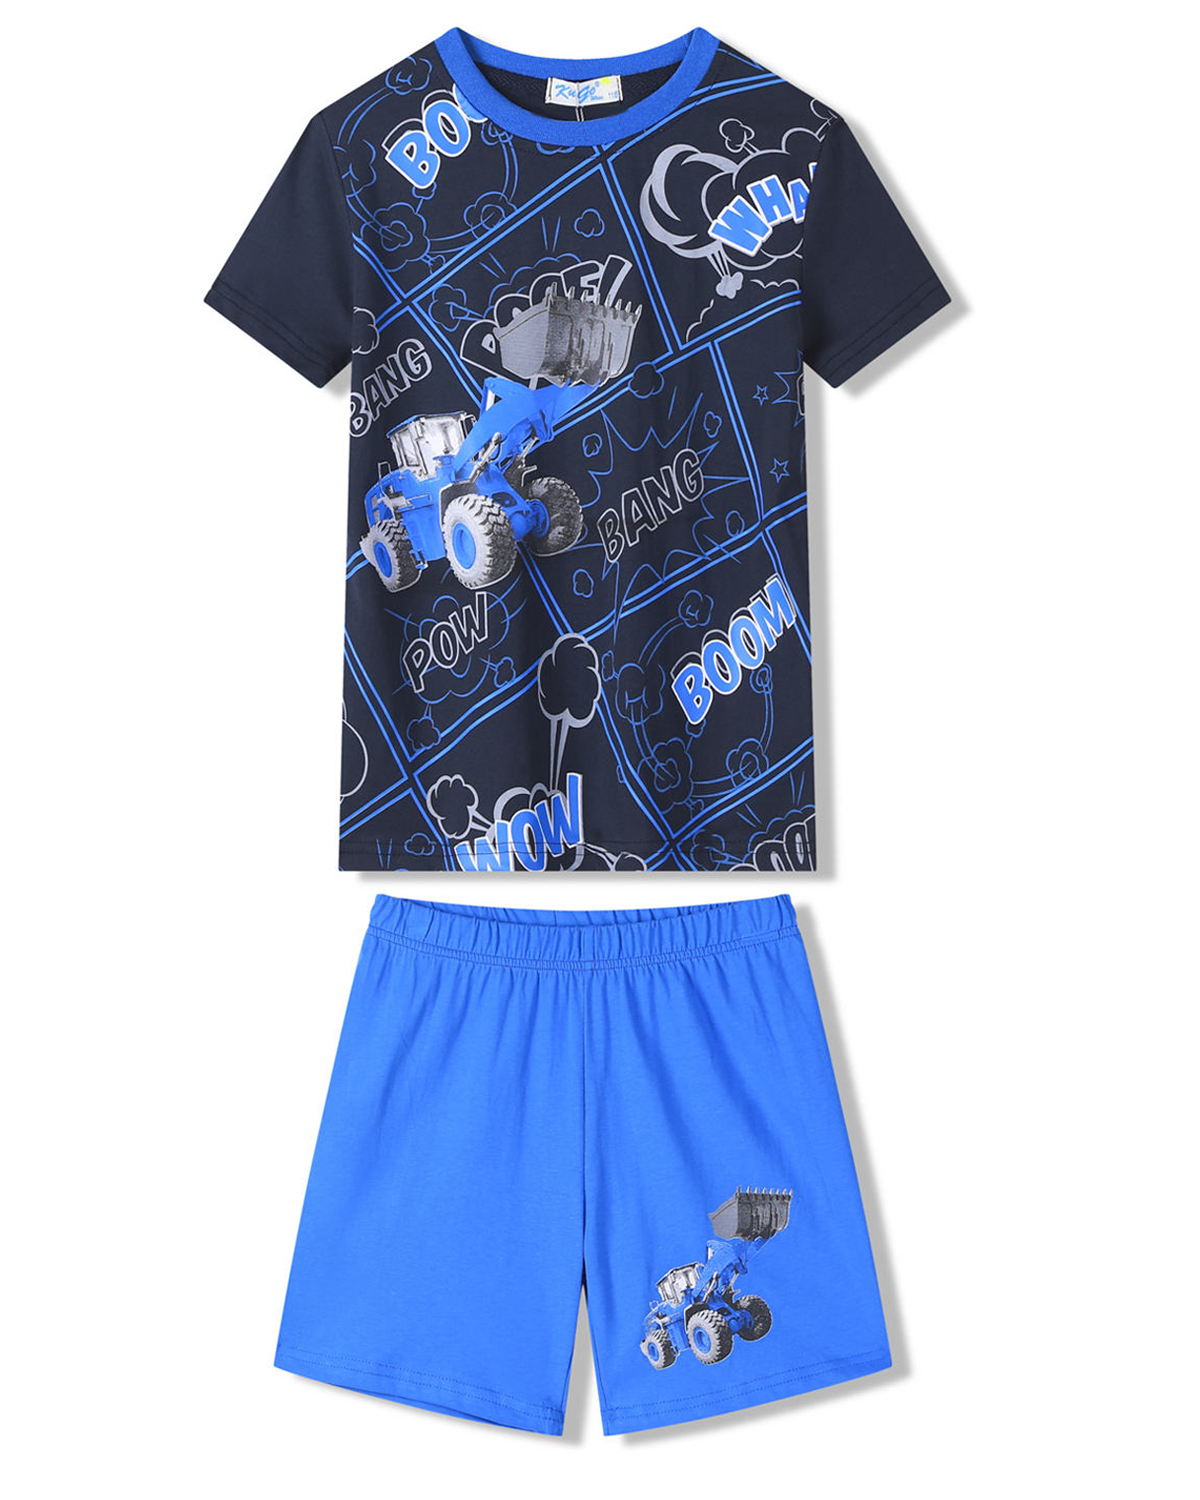 Chlapecké pyžamo - KUGO WT7310, tmavě modrá Barva: Modrá tmavě, Velikost: 116